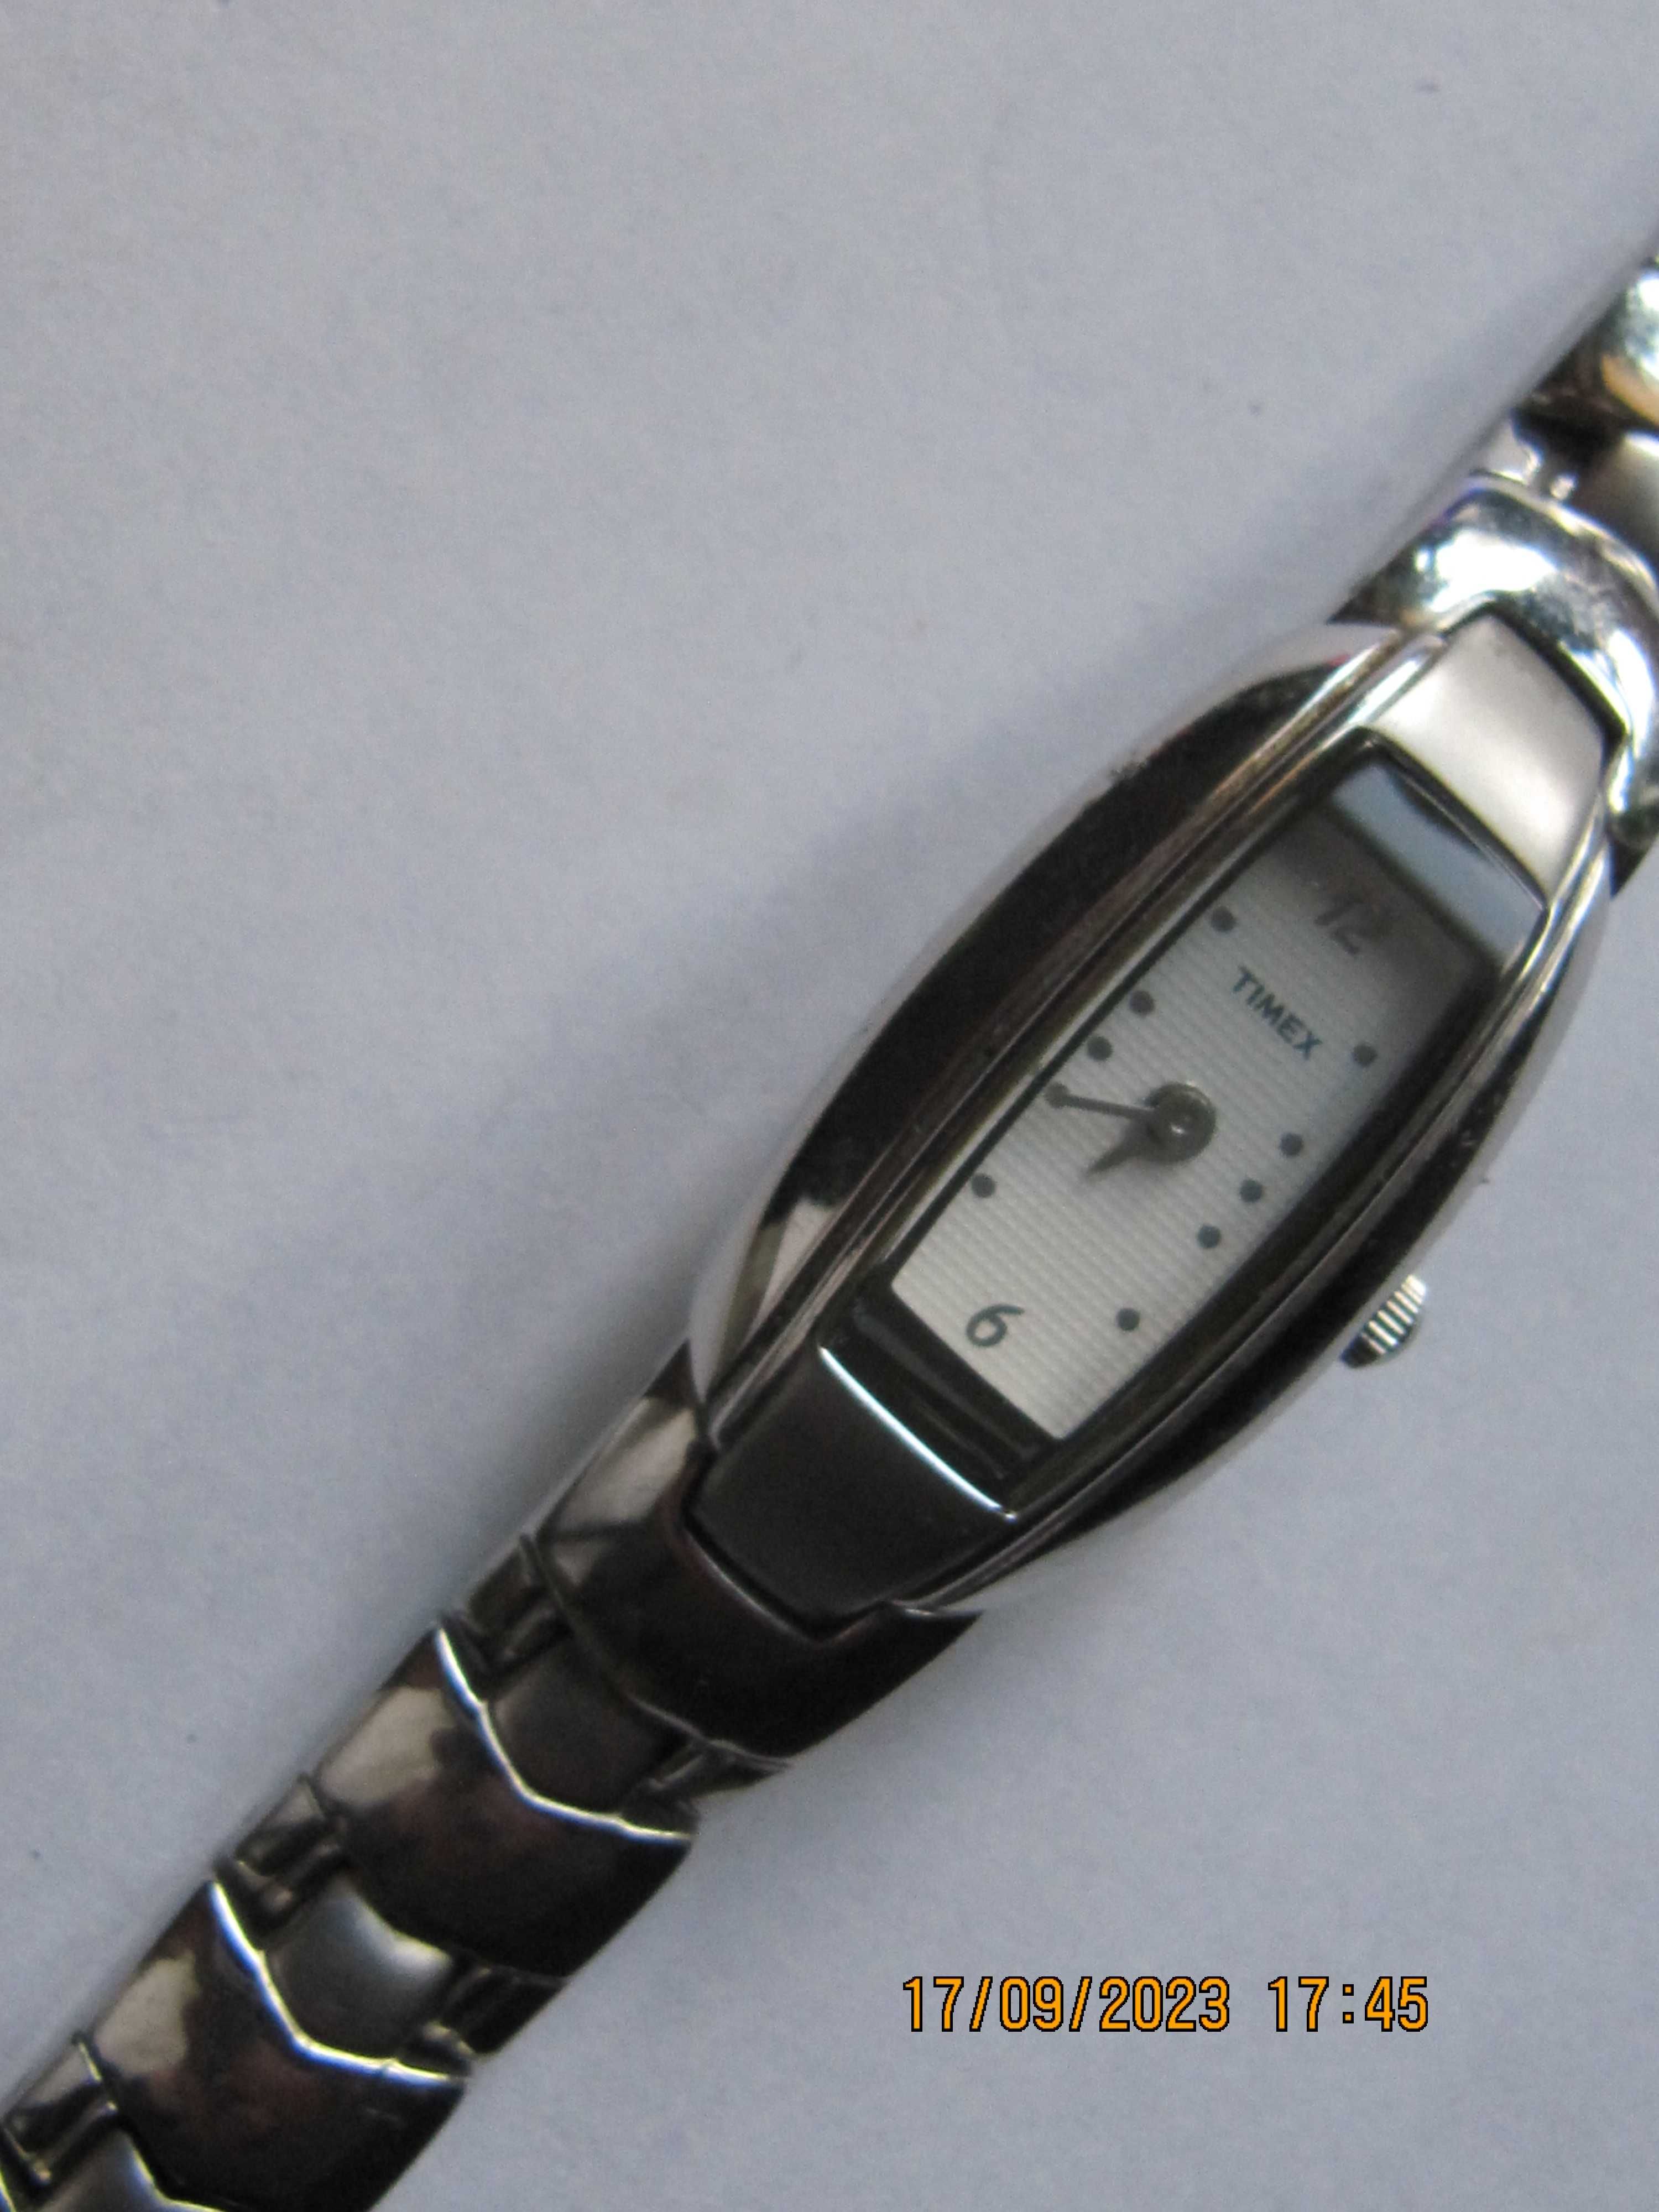 Timex quartz oryginalny zegarek damski